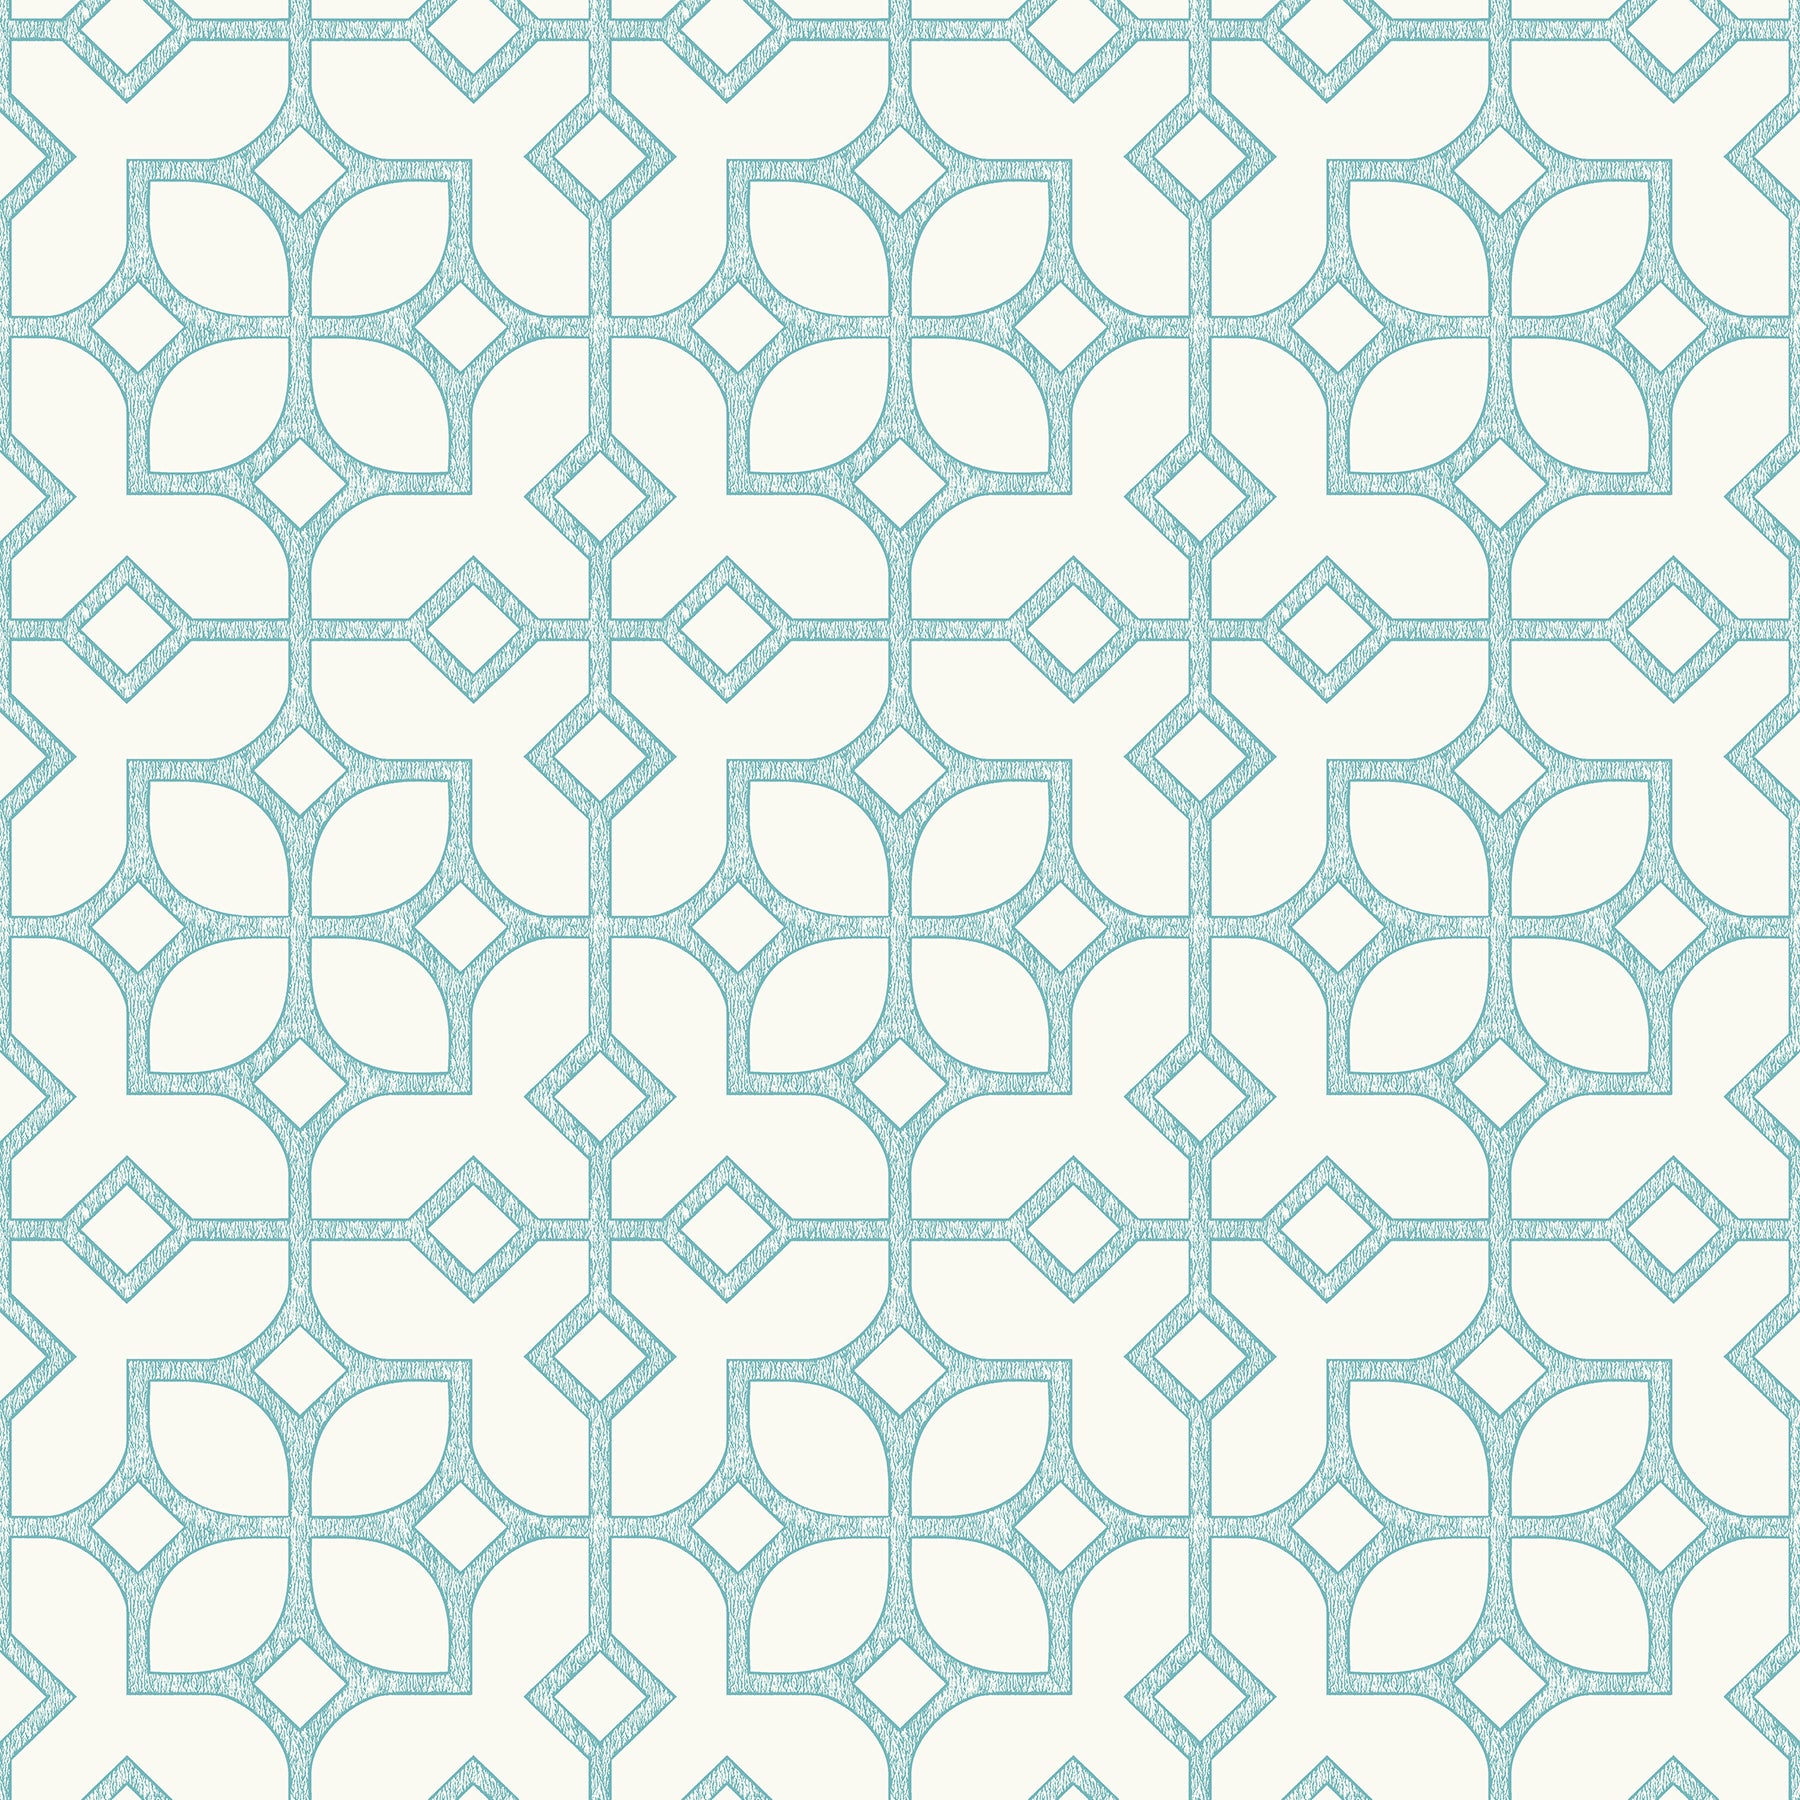 View 2697-78025 Maze Turquoise Tile A-Street Prints Wallpaper